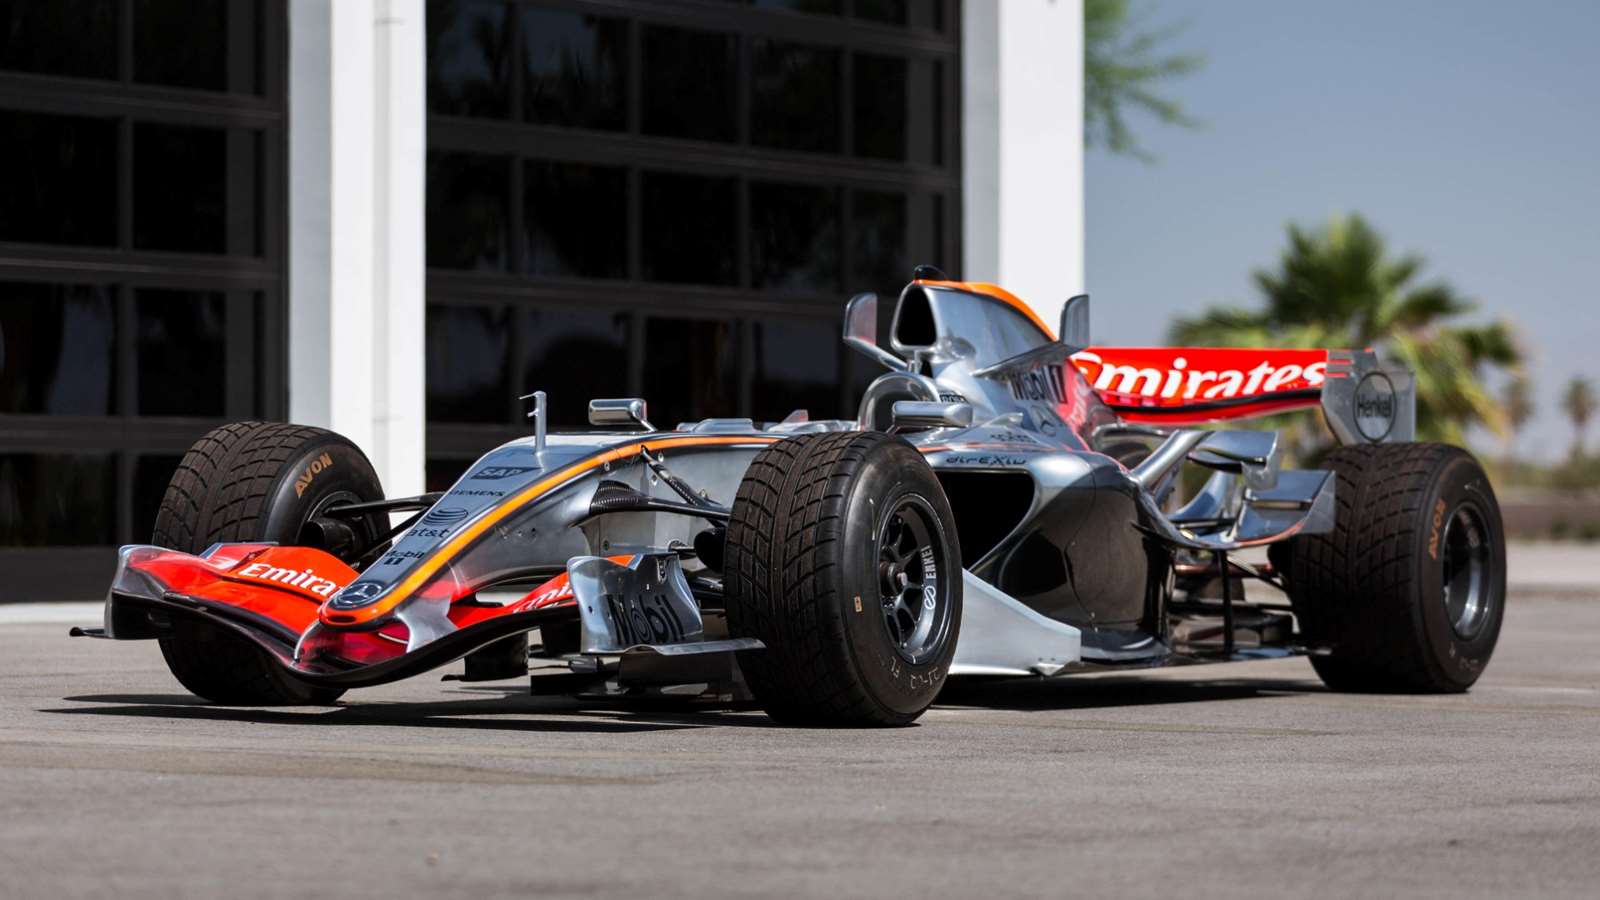 Kimi Räikkönen’s McLaren MP4/21 up for sale with Bonhams